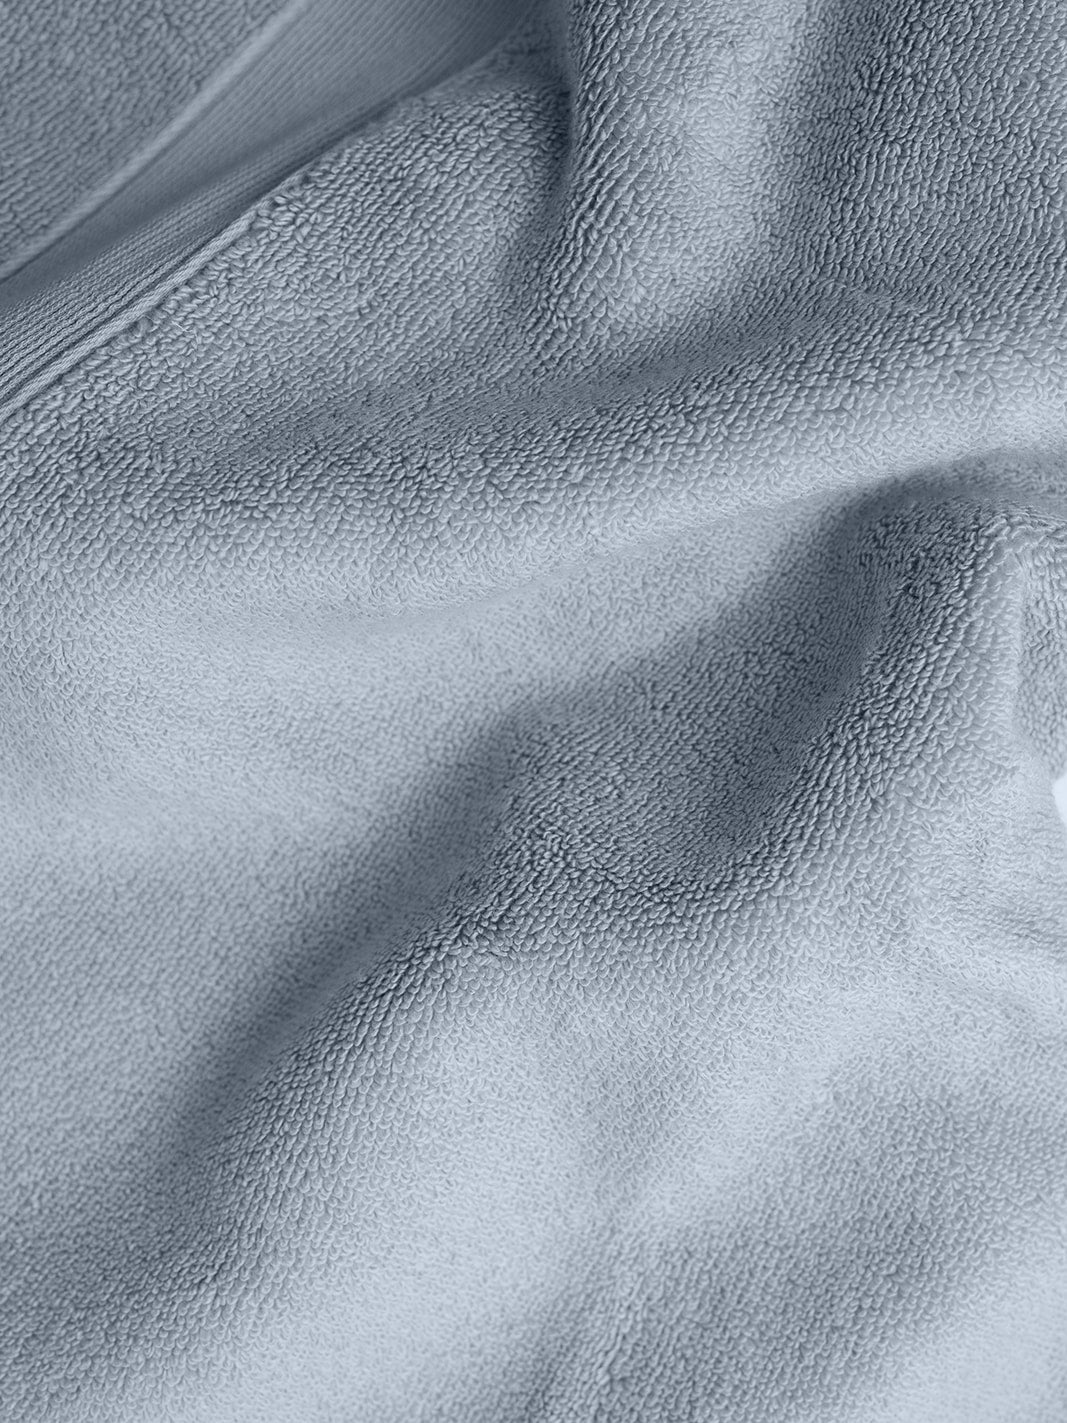 Close up of harbor mist luxe bath towel 